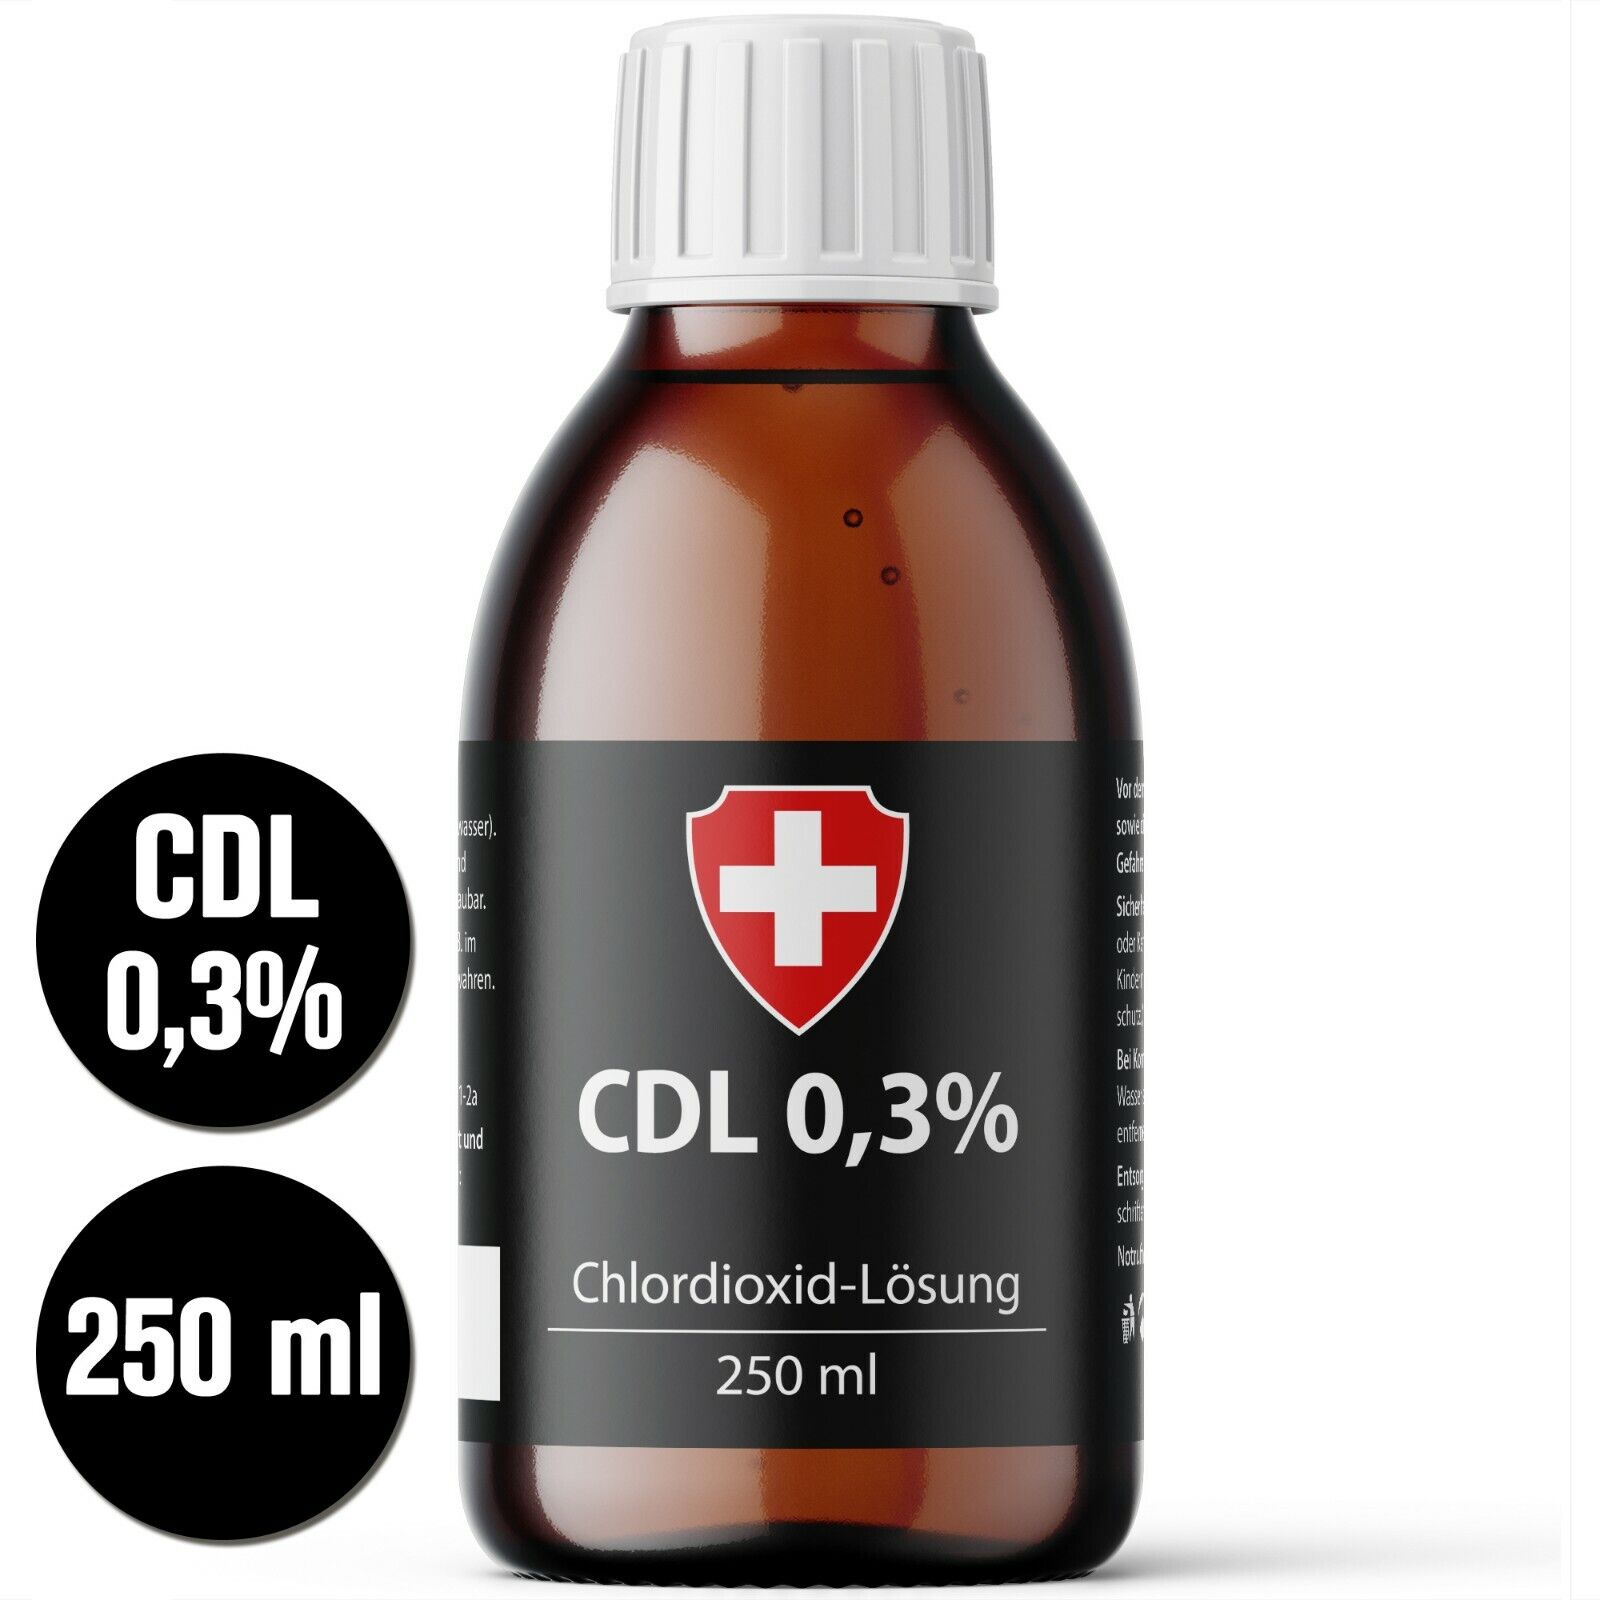 CDL (CDS) Lösung 0,3%, 250ml Glasflasche. Top-Apothekenqualität, Tropf-Dosierer